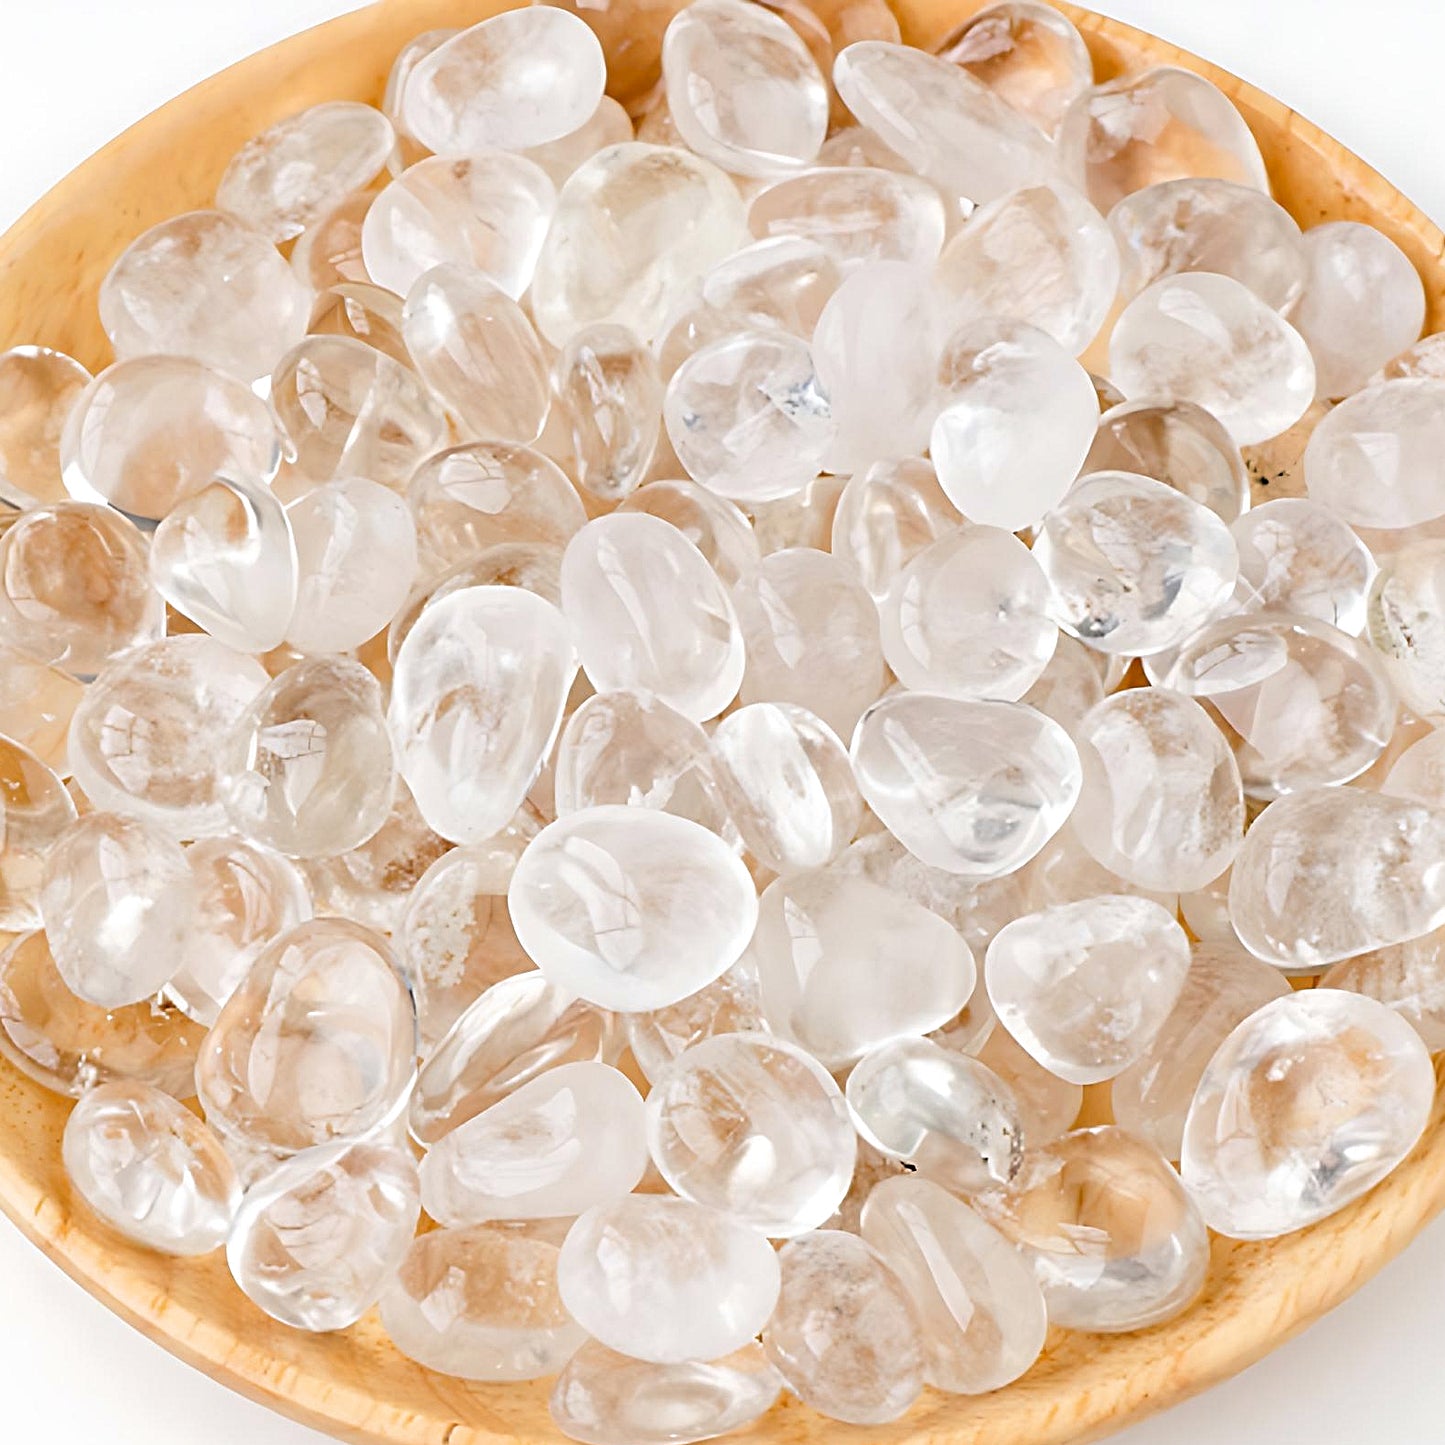 semi-precious tumbled stones in a bamboo bowl: clear quartz